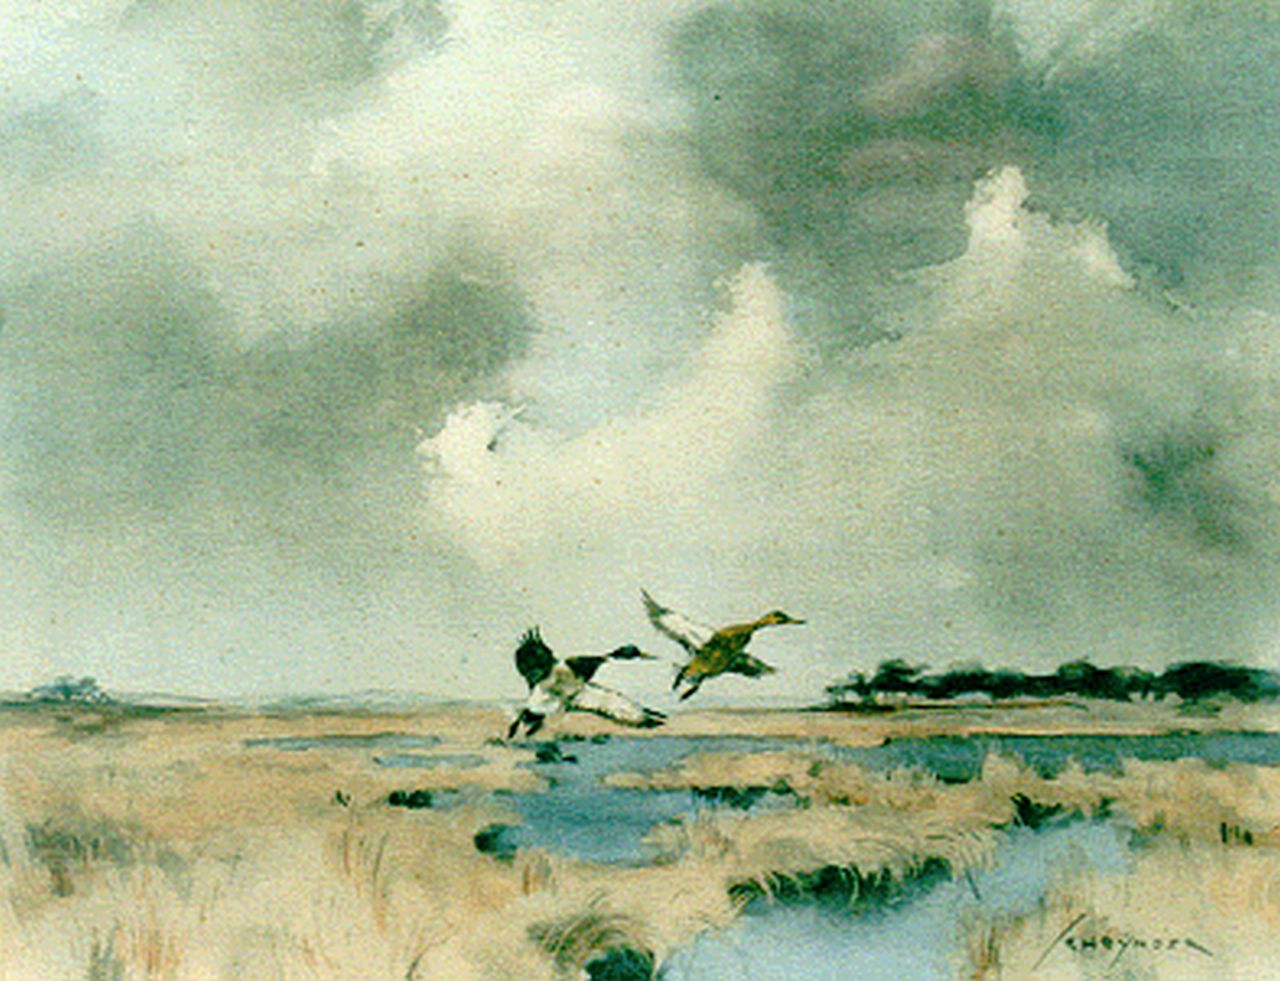 Schrijnder J.A.  | Josephus Alphonus 'Jo' Schrijnder, Ducks flying up, watercolour and gouache on paper 21.0 x 27.5 cm, signed l.r.